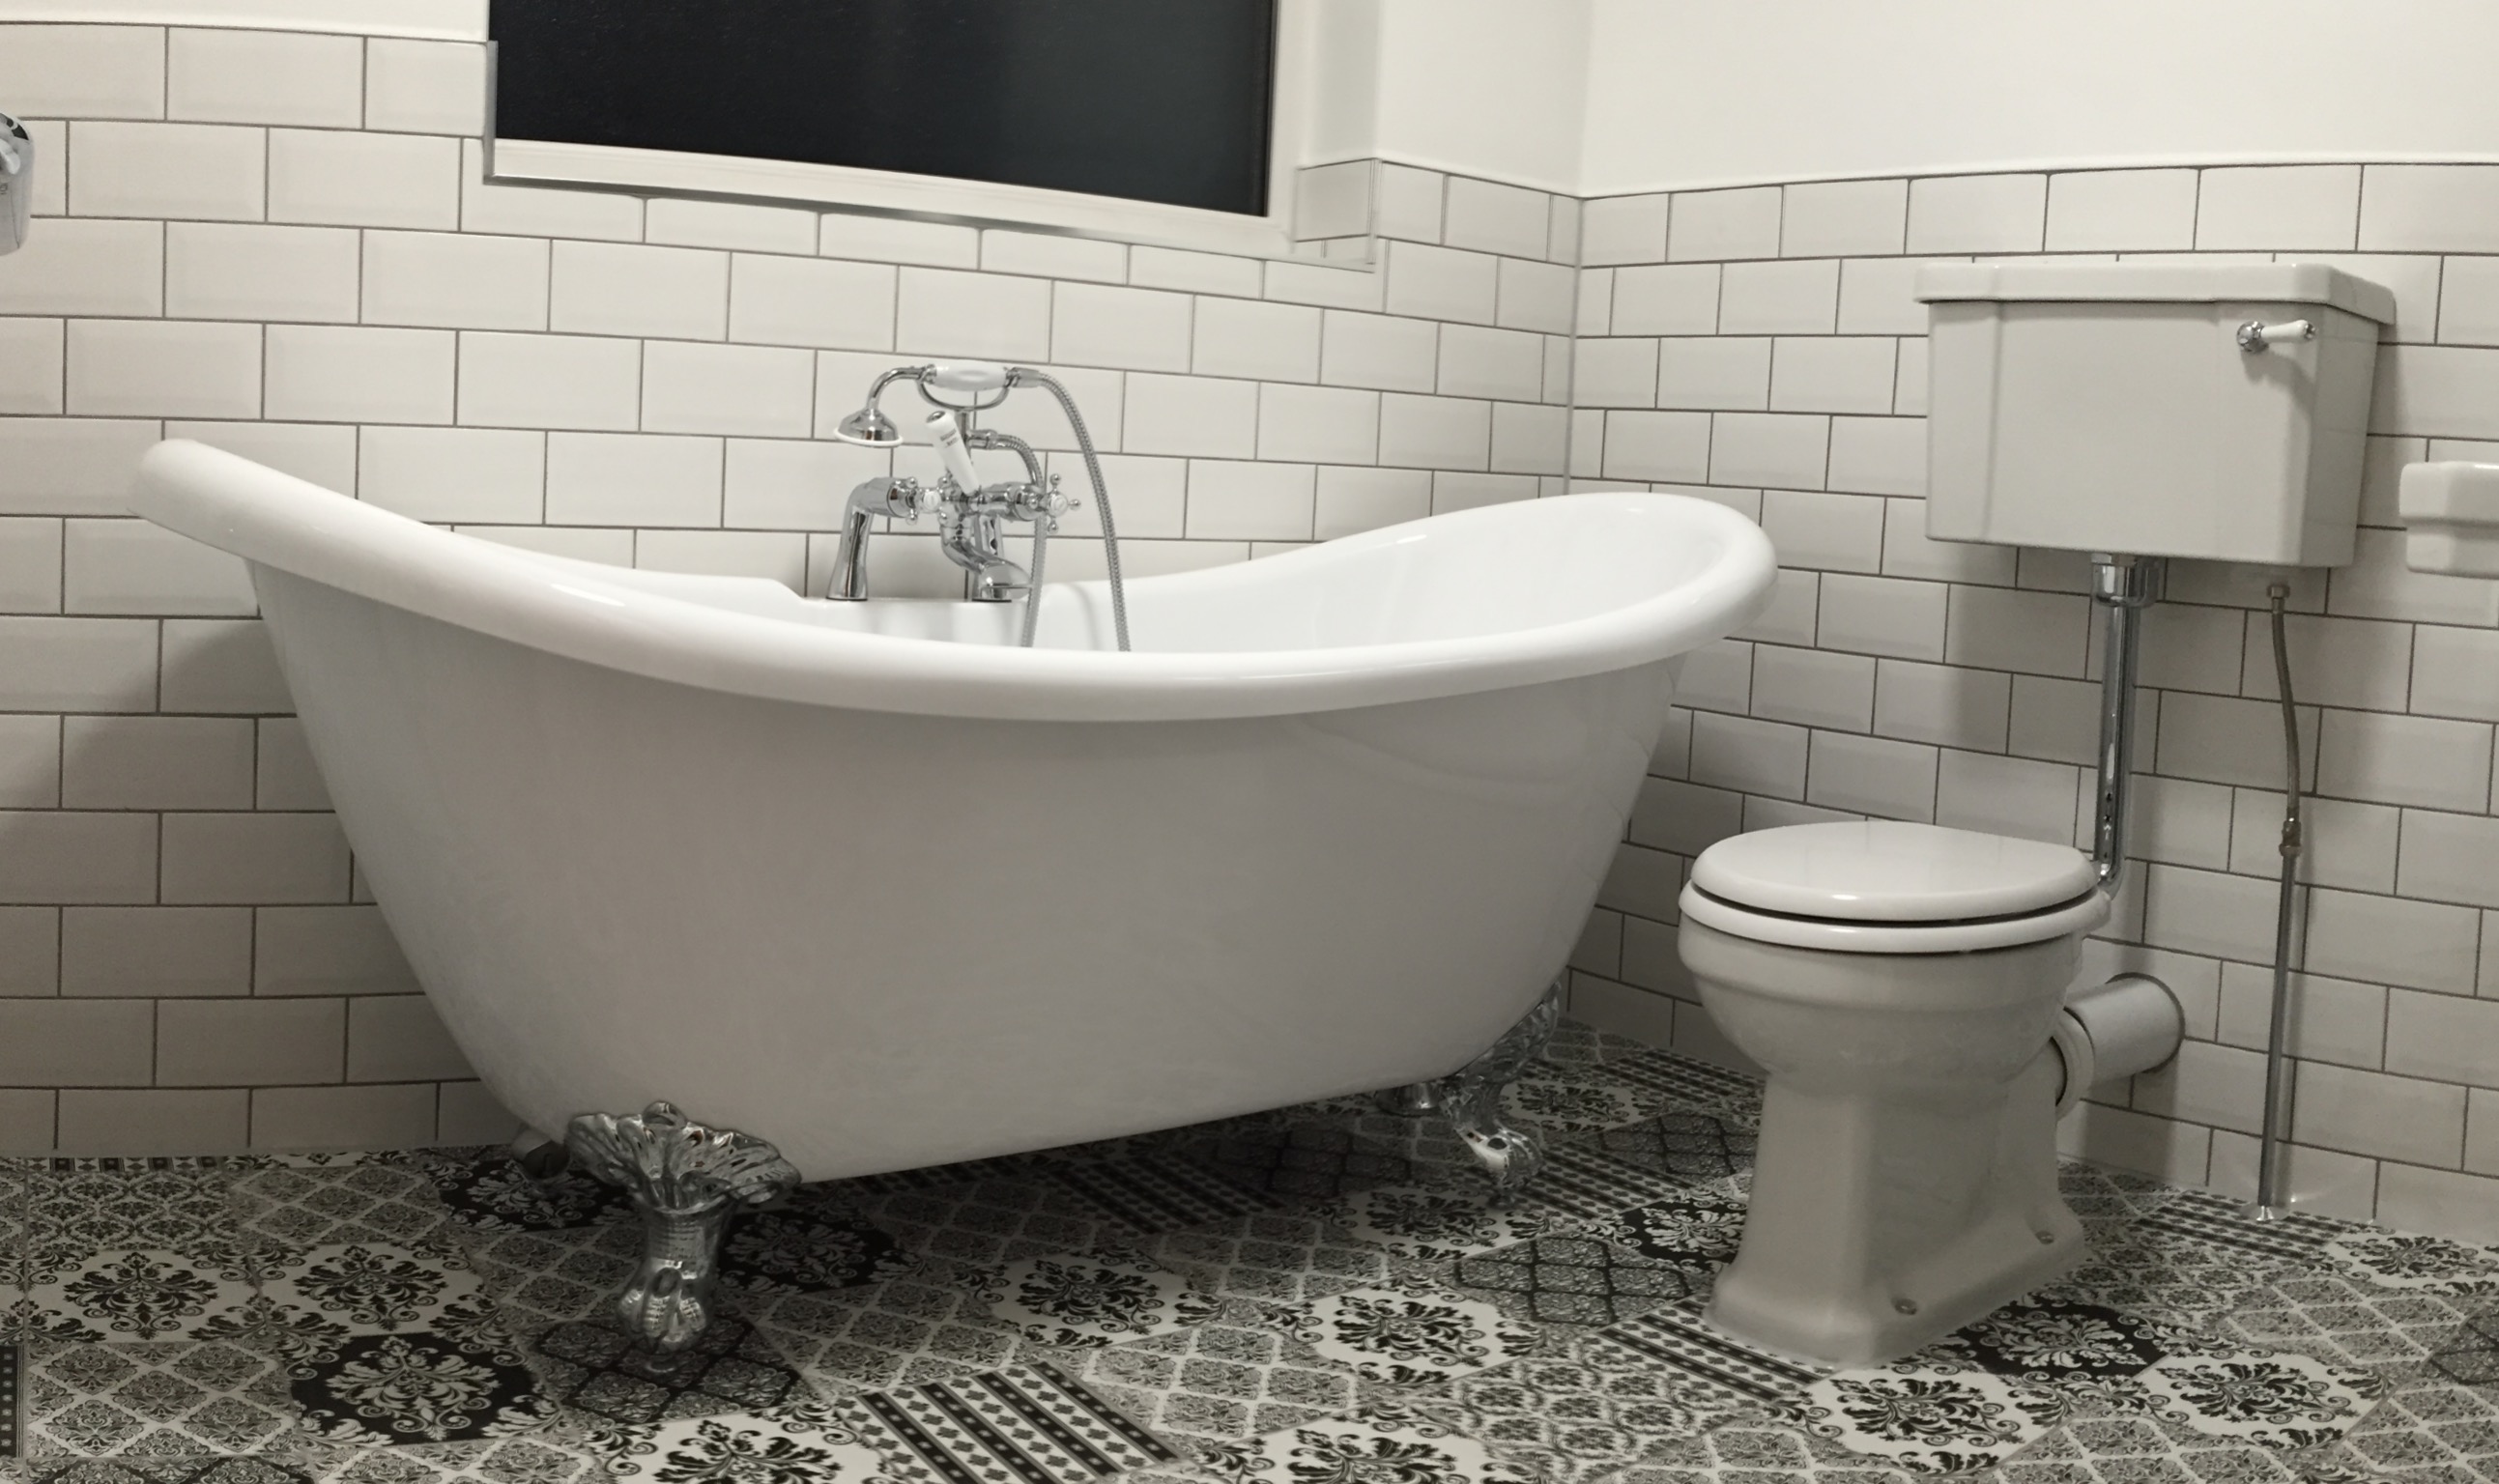 25 Best Ceramic Tiles for Bathroom images: Victorian Style Bathroom Tiles